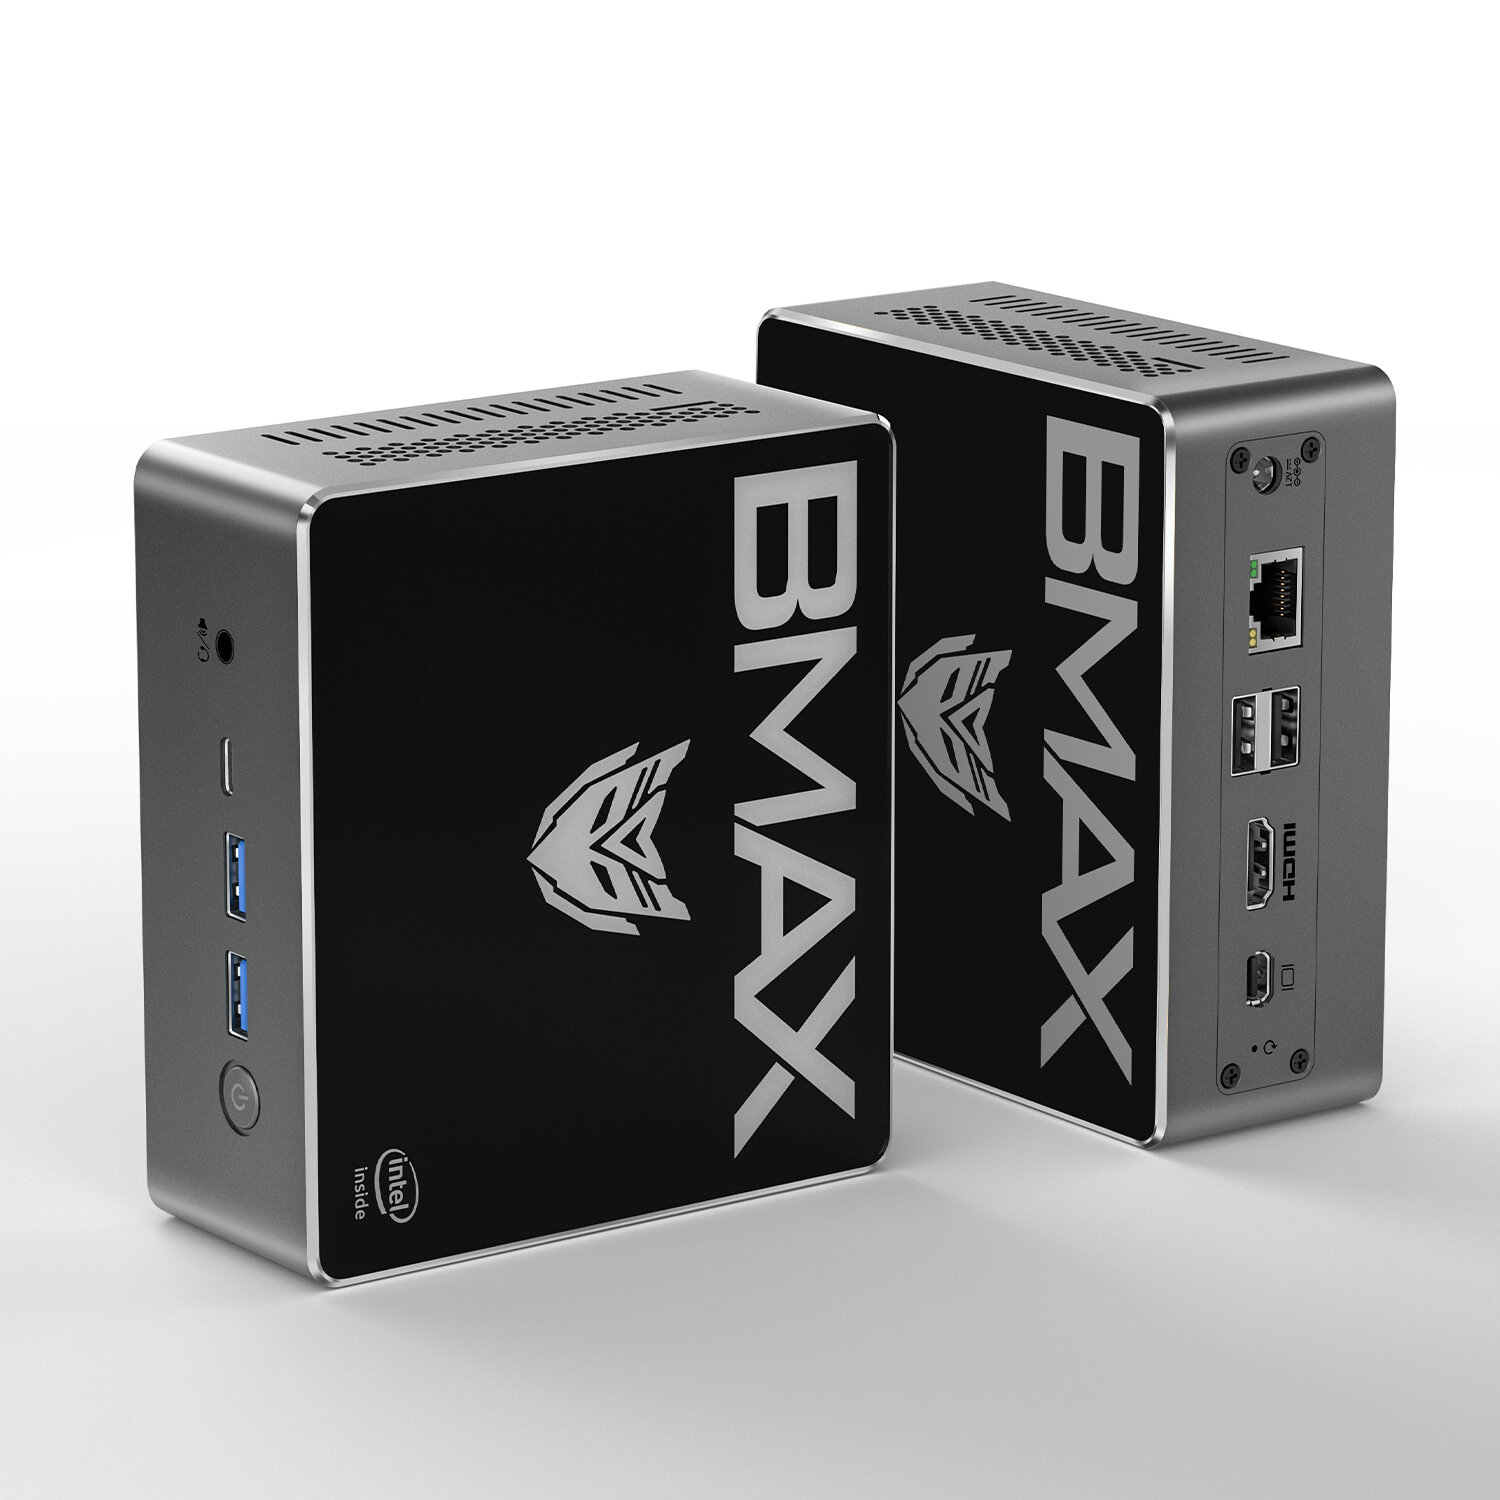 Mini PC Bmax B3 Plus z EU za $249.99 / ~941zł